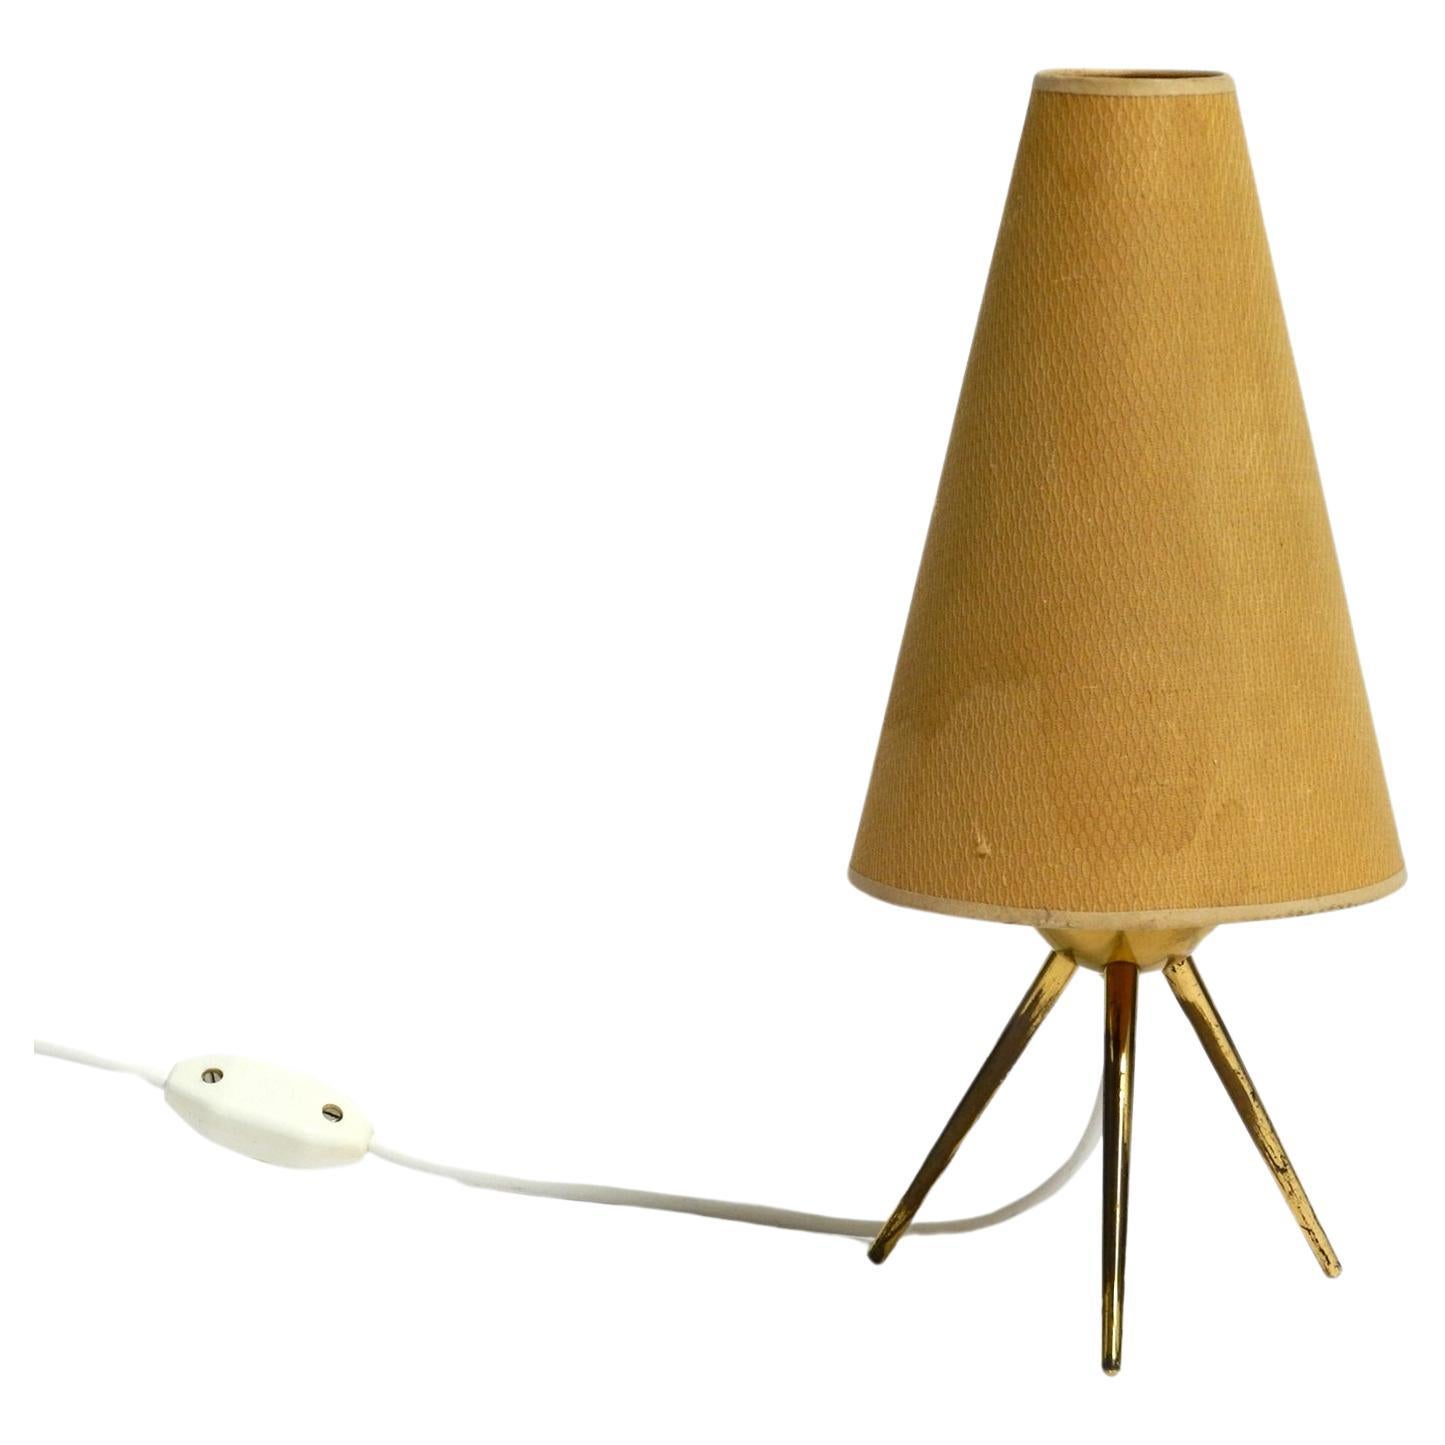 Very elegant original Mid Century brass tripod table lamp original lampshade